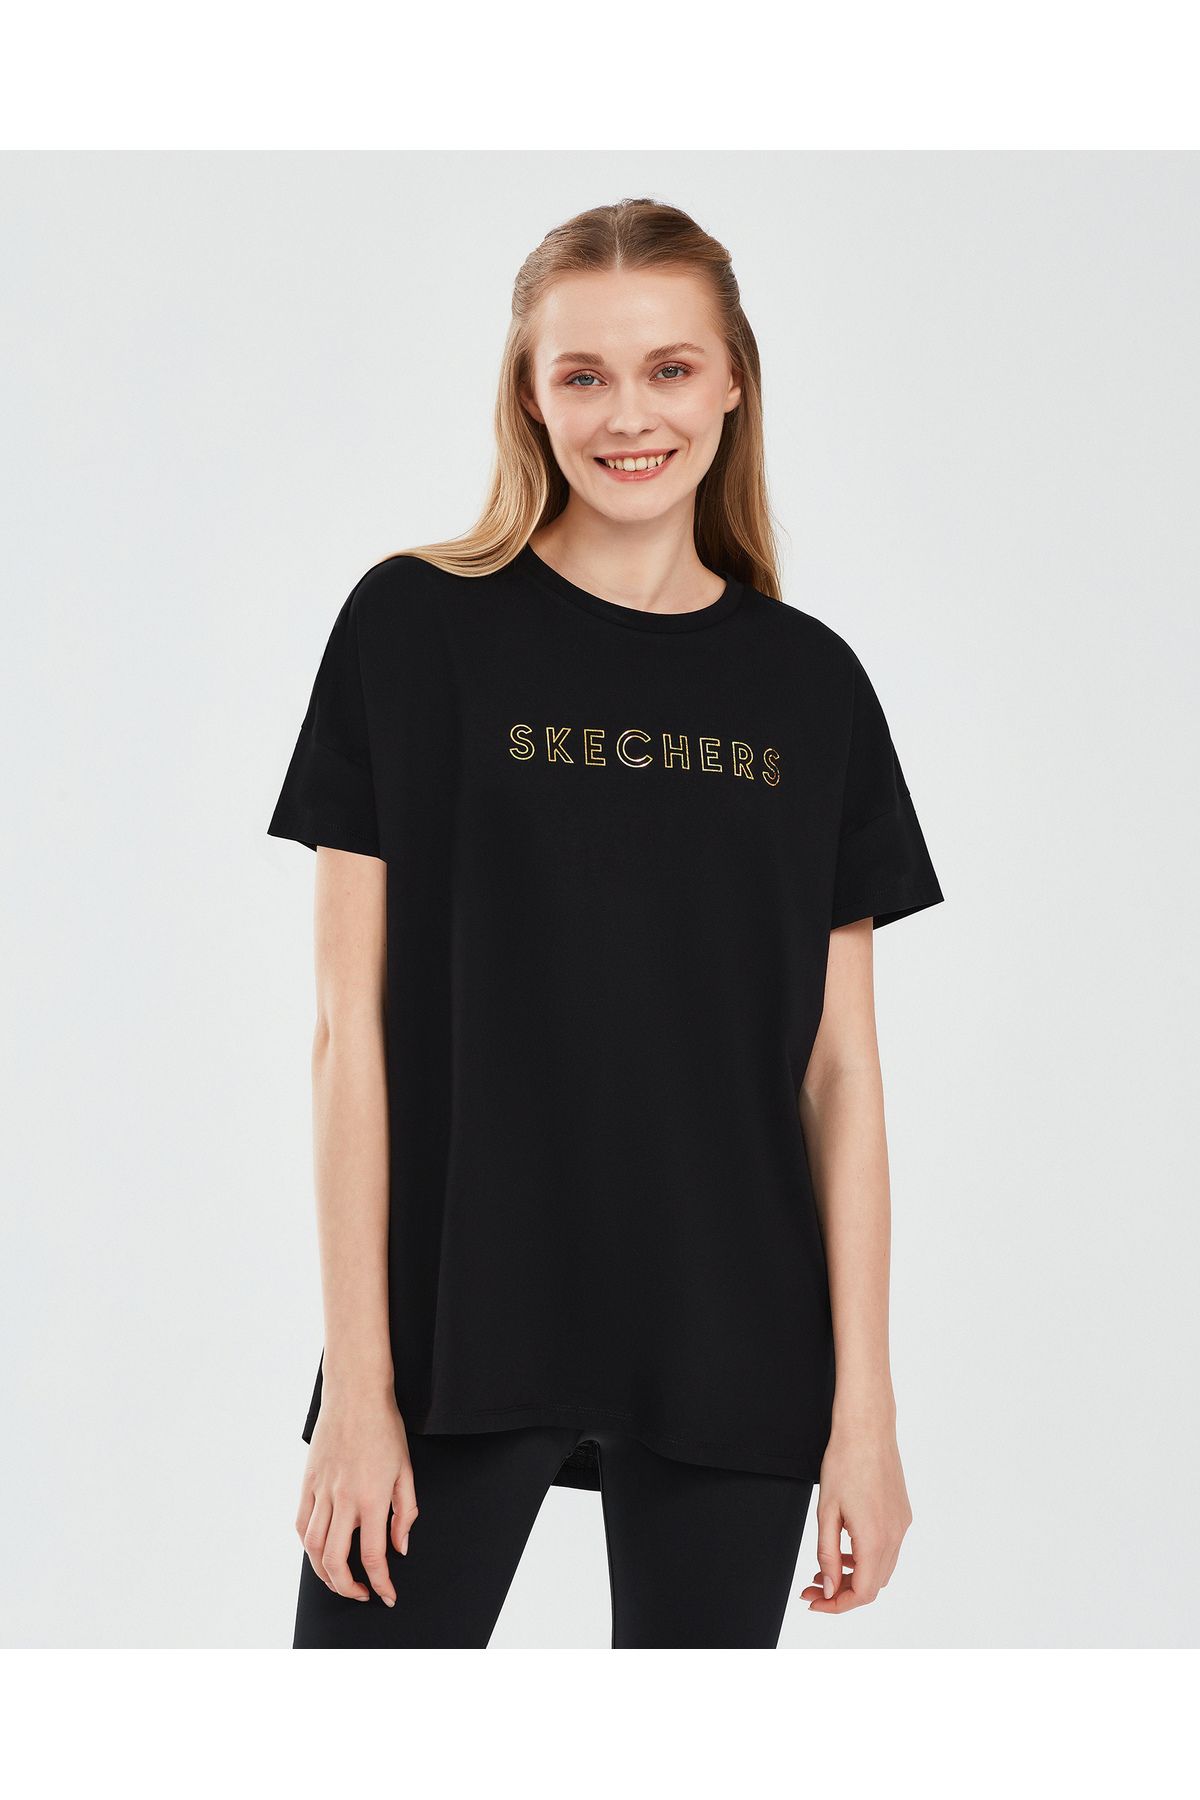 Skechers W Graphic Tee Crew Neck T-shirt Kadın Siyah Tshirt S231293-001